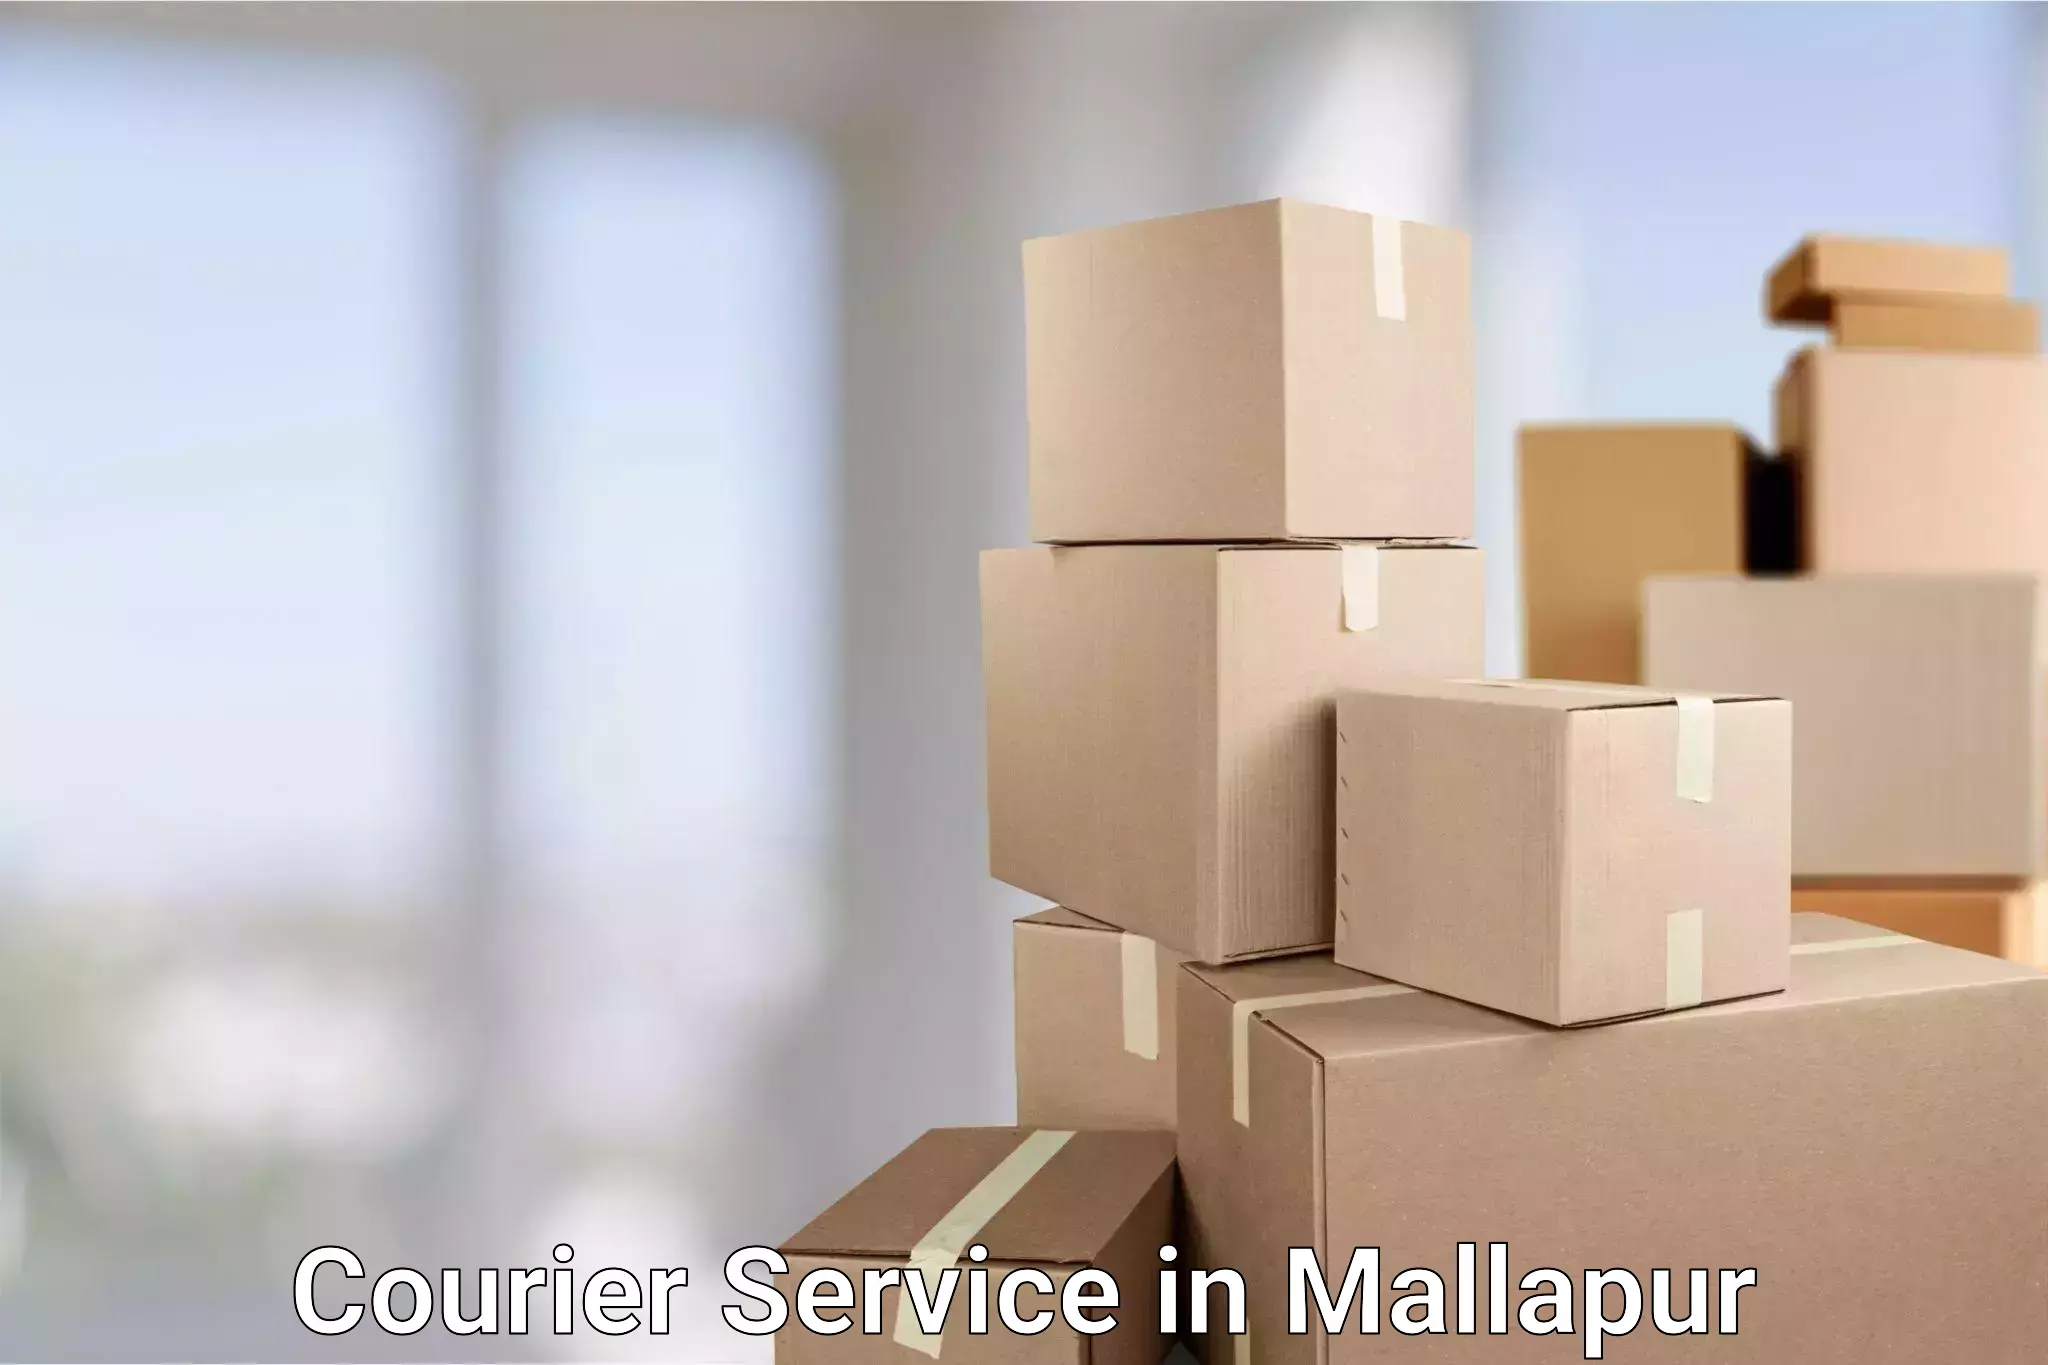 Flexible parcel services in Mallapur